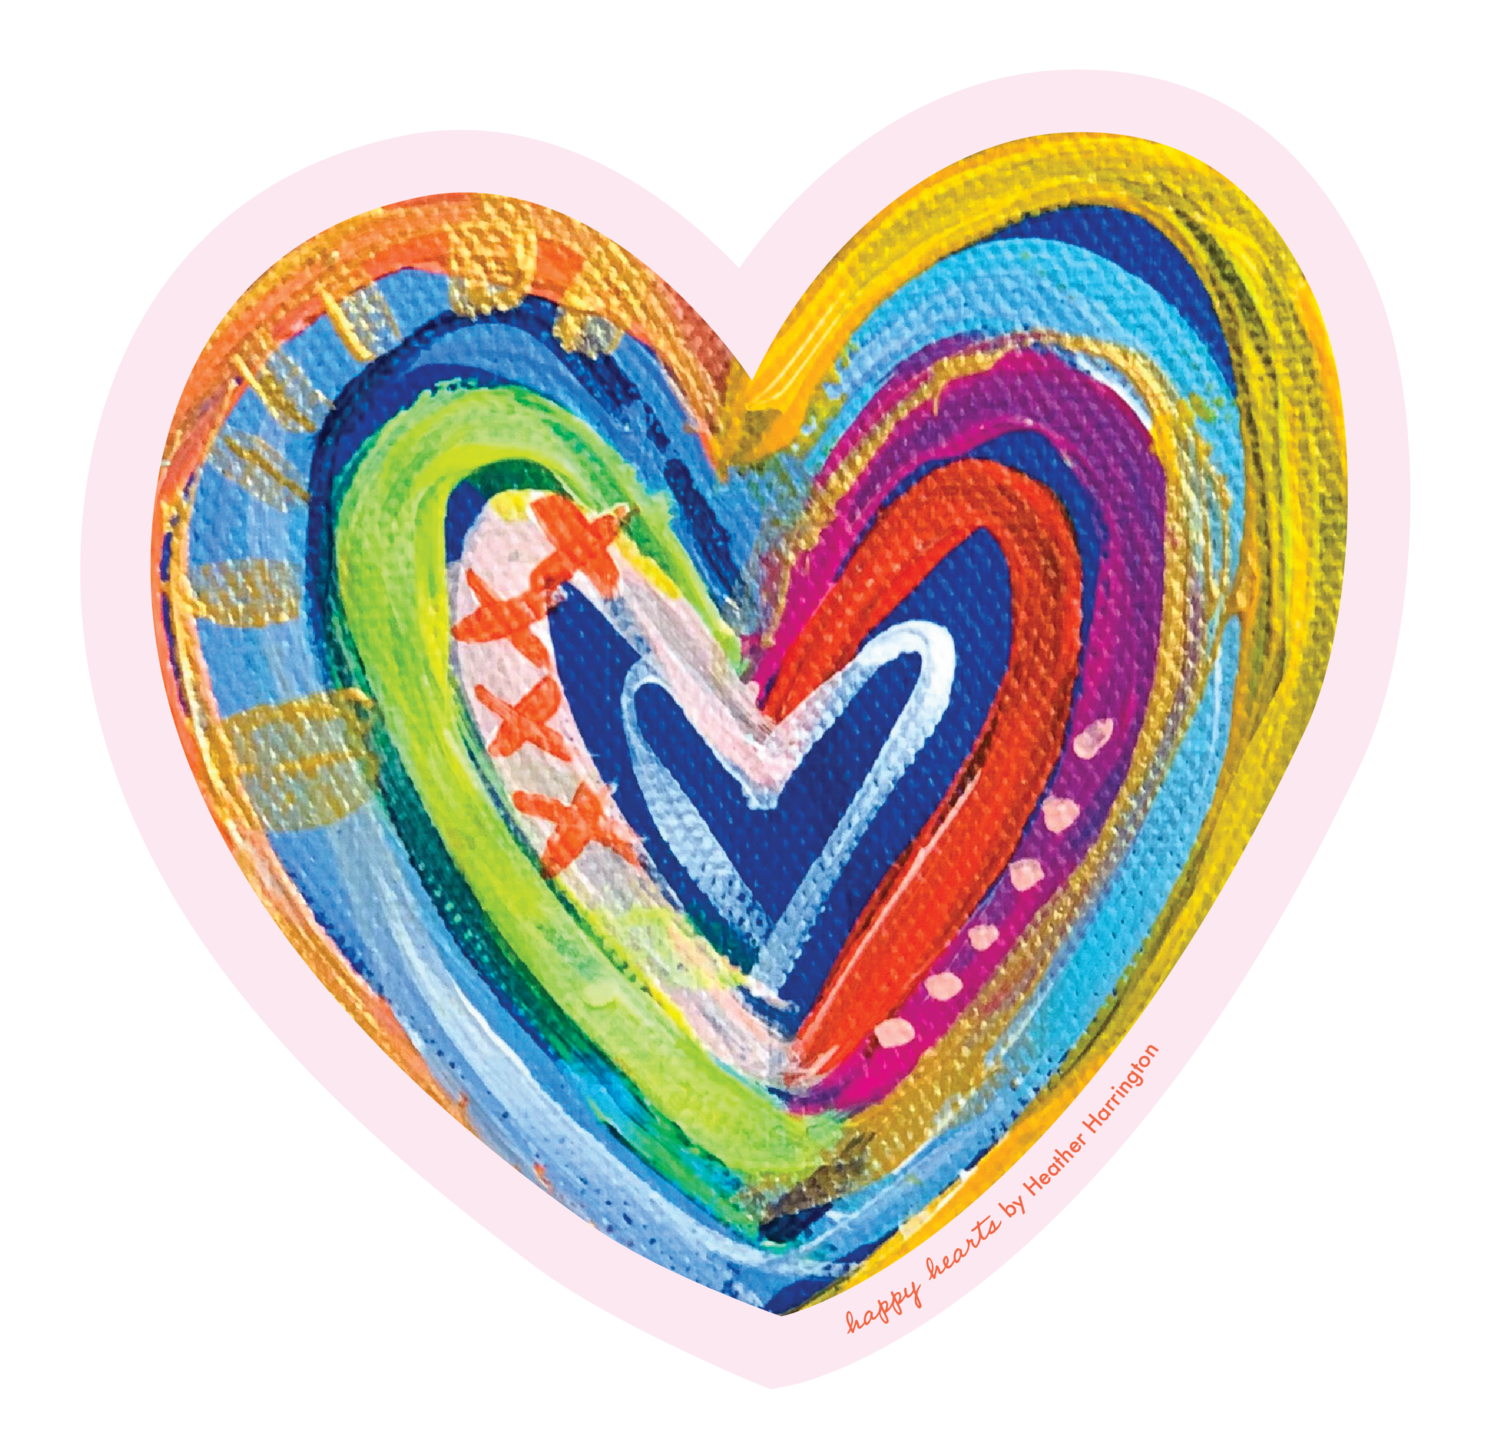 3 Heart Sticker — Life and Whim Studio by Heather Harrington